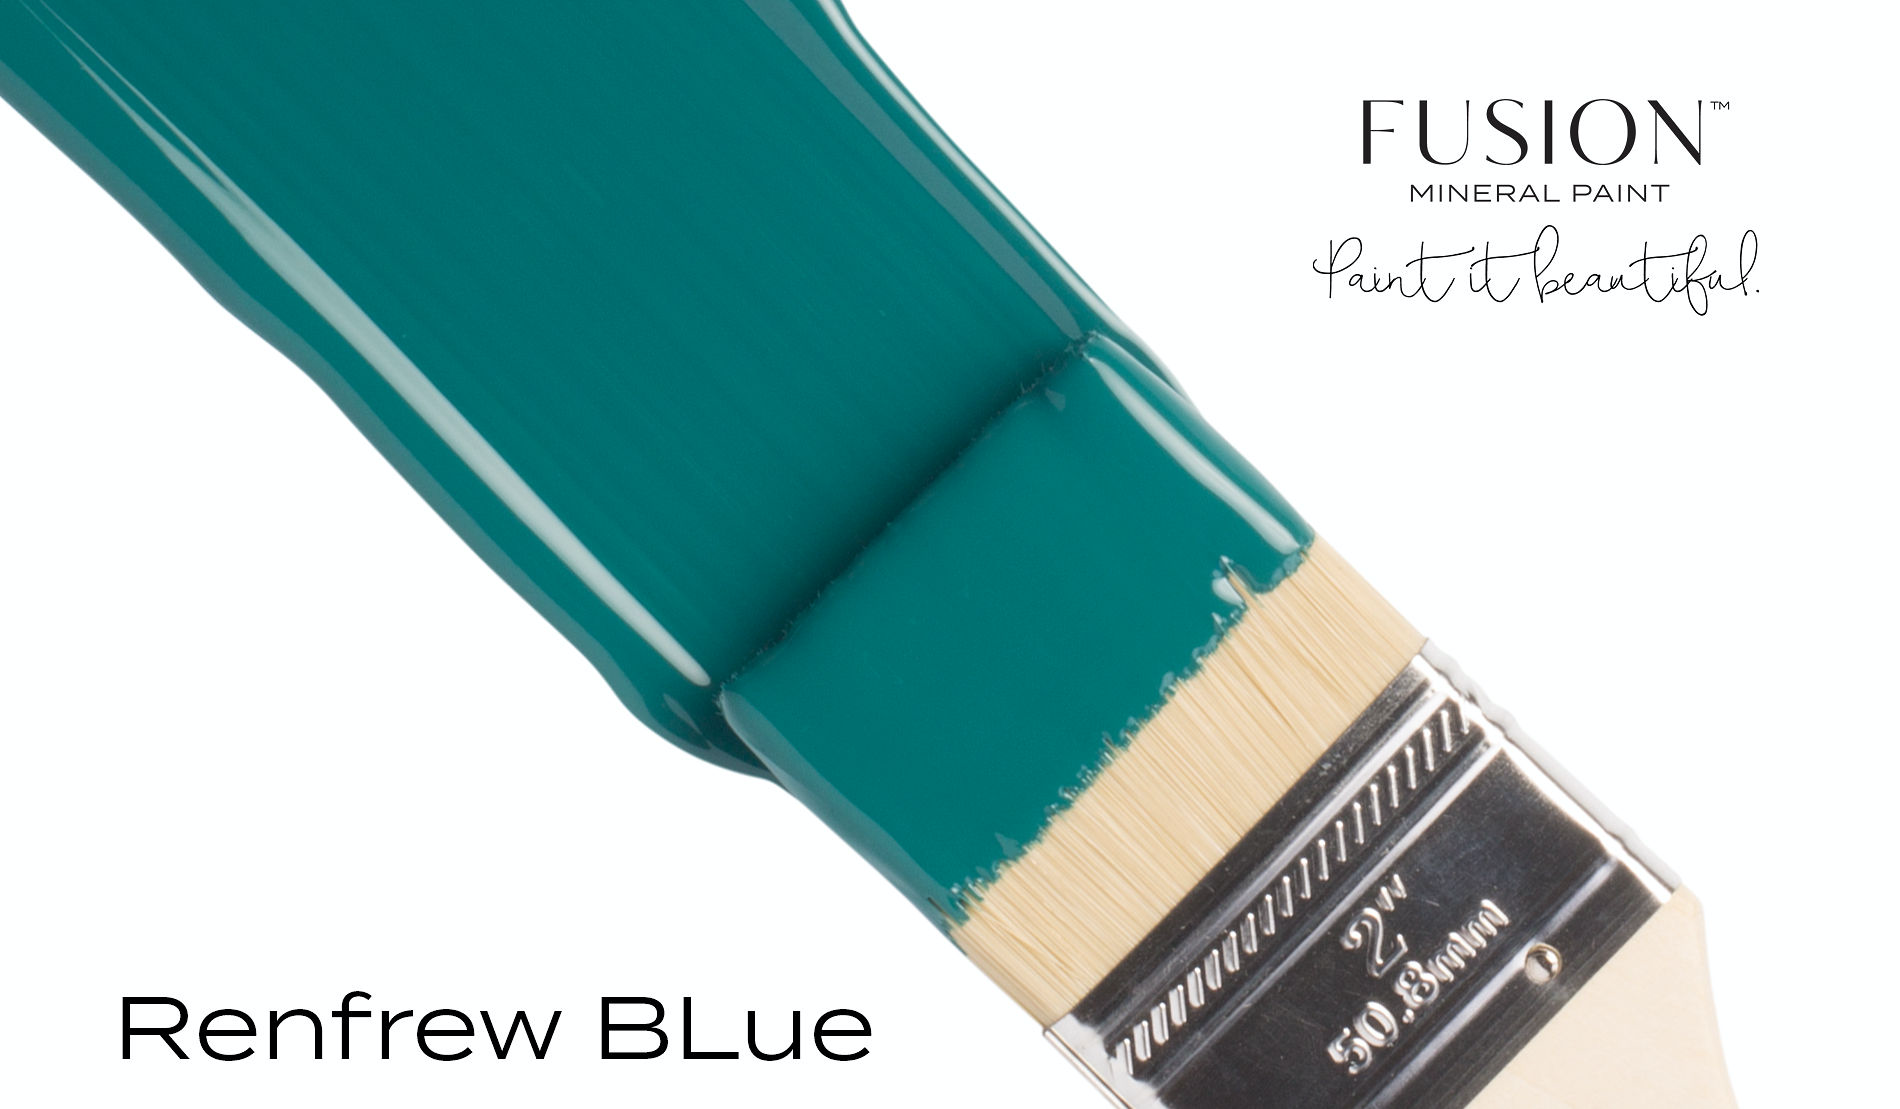 Renfrew Blue